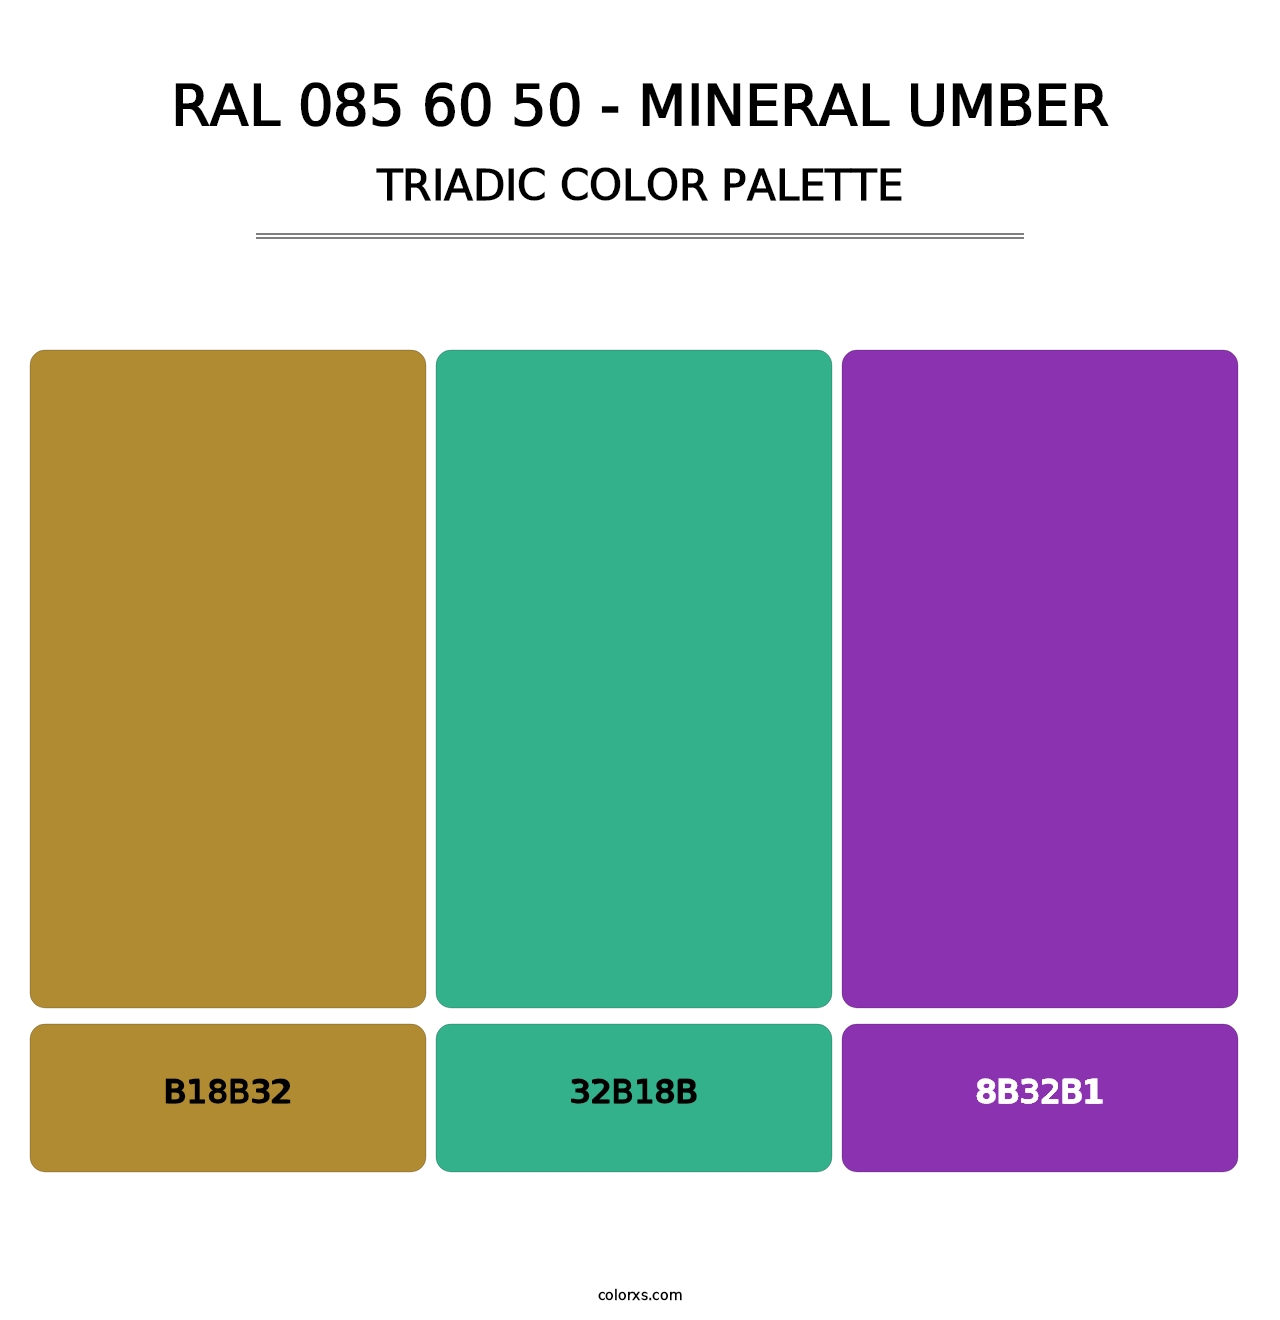 RAL 085 60 50 - Mineral Umber - Triadic Color Palette